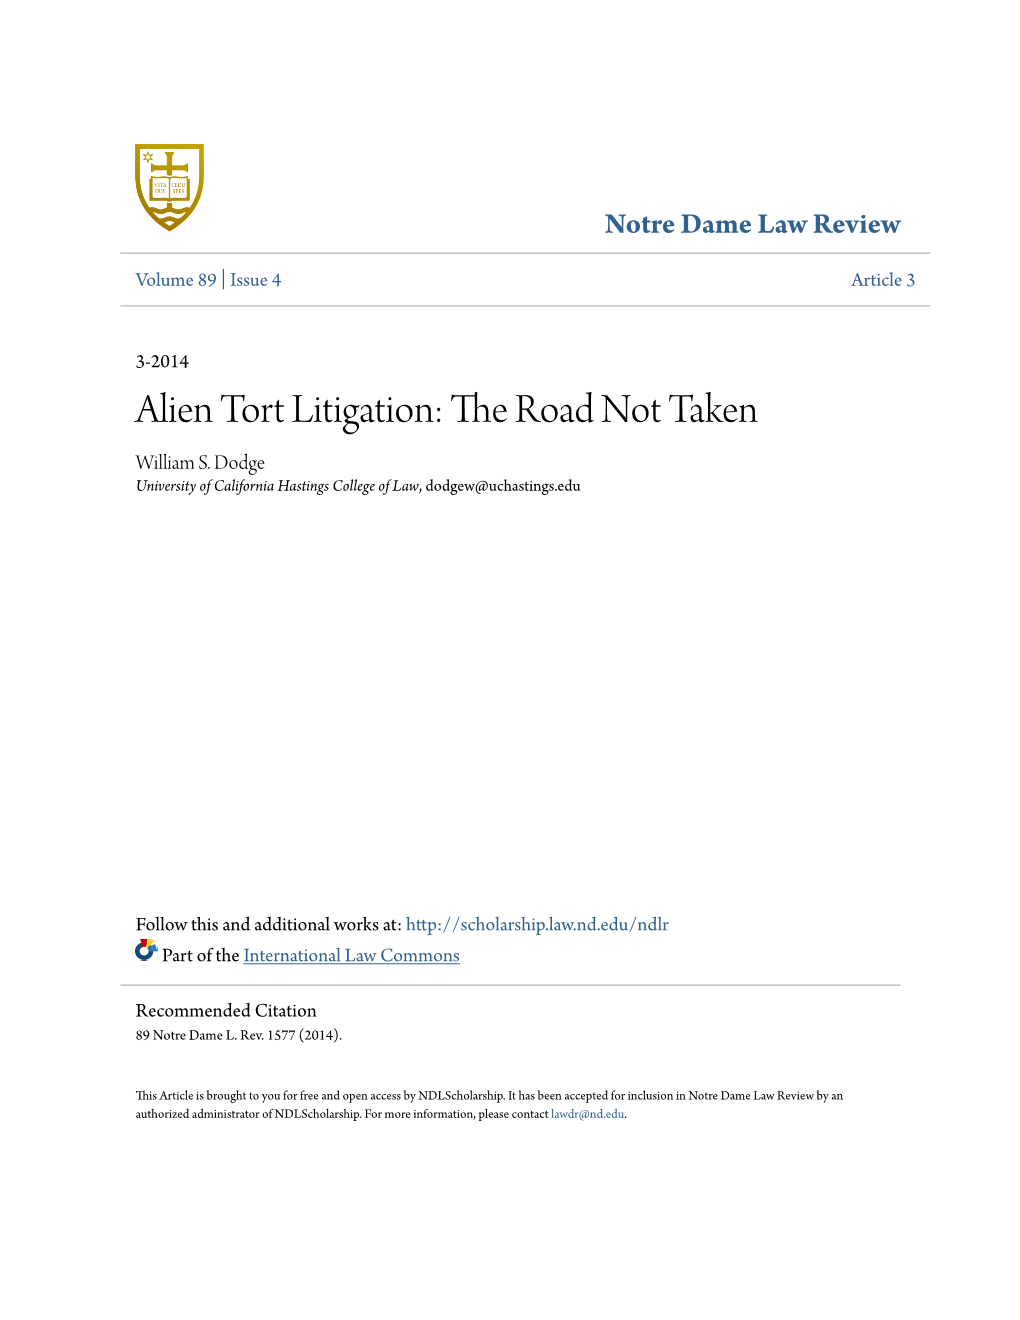 Alien Tort Litigation: the Road Not Taken William S